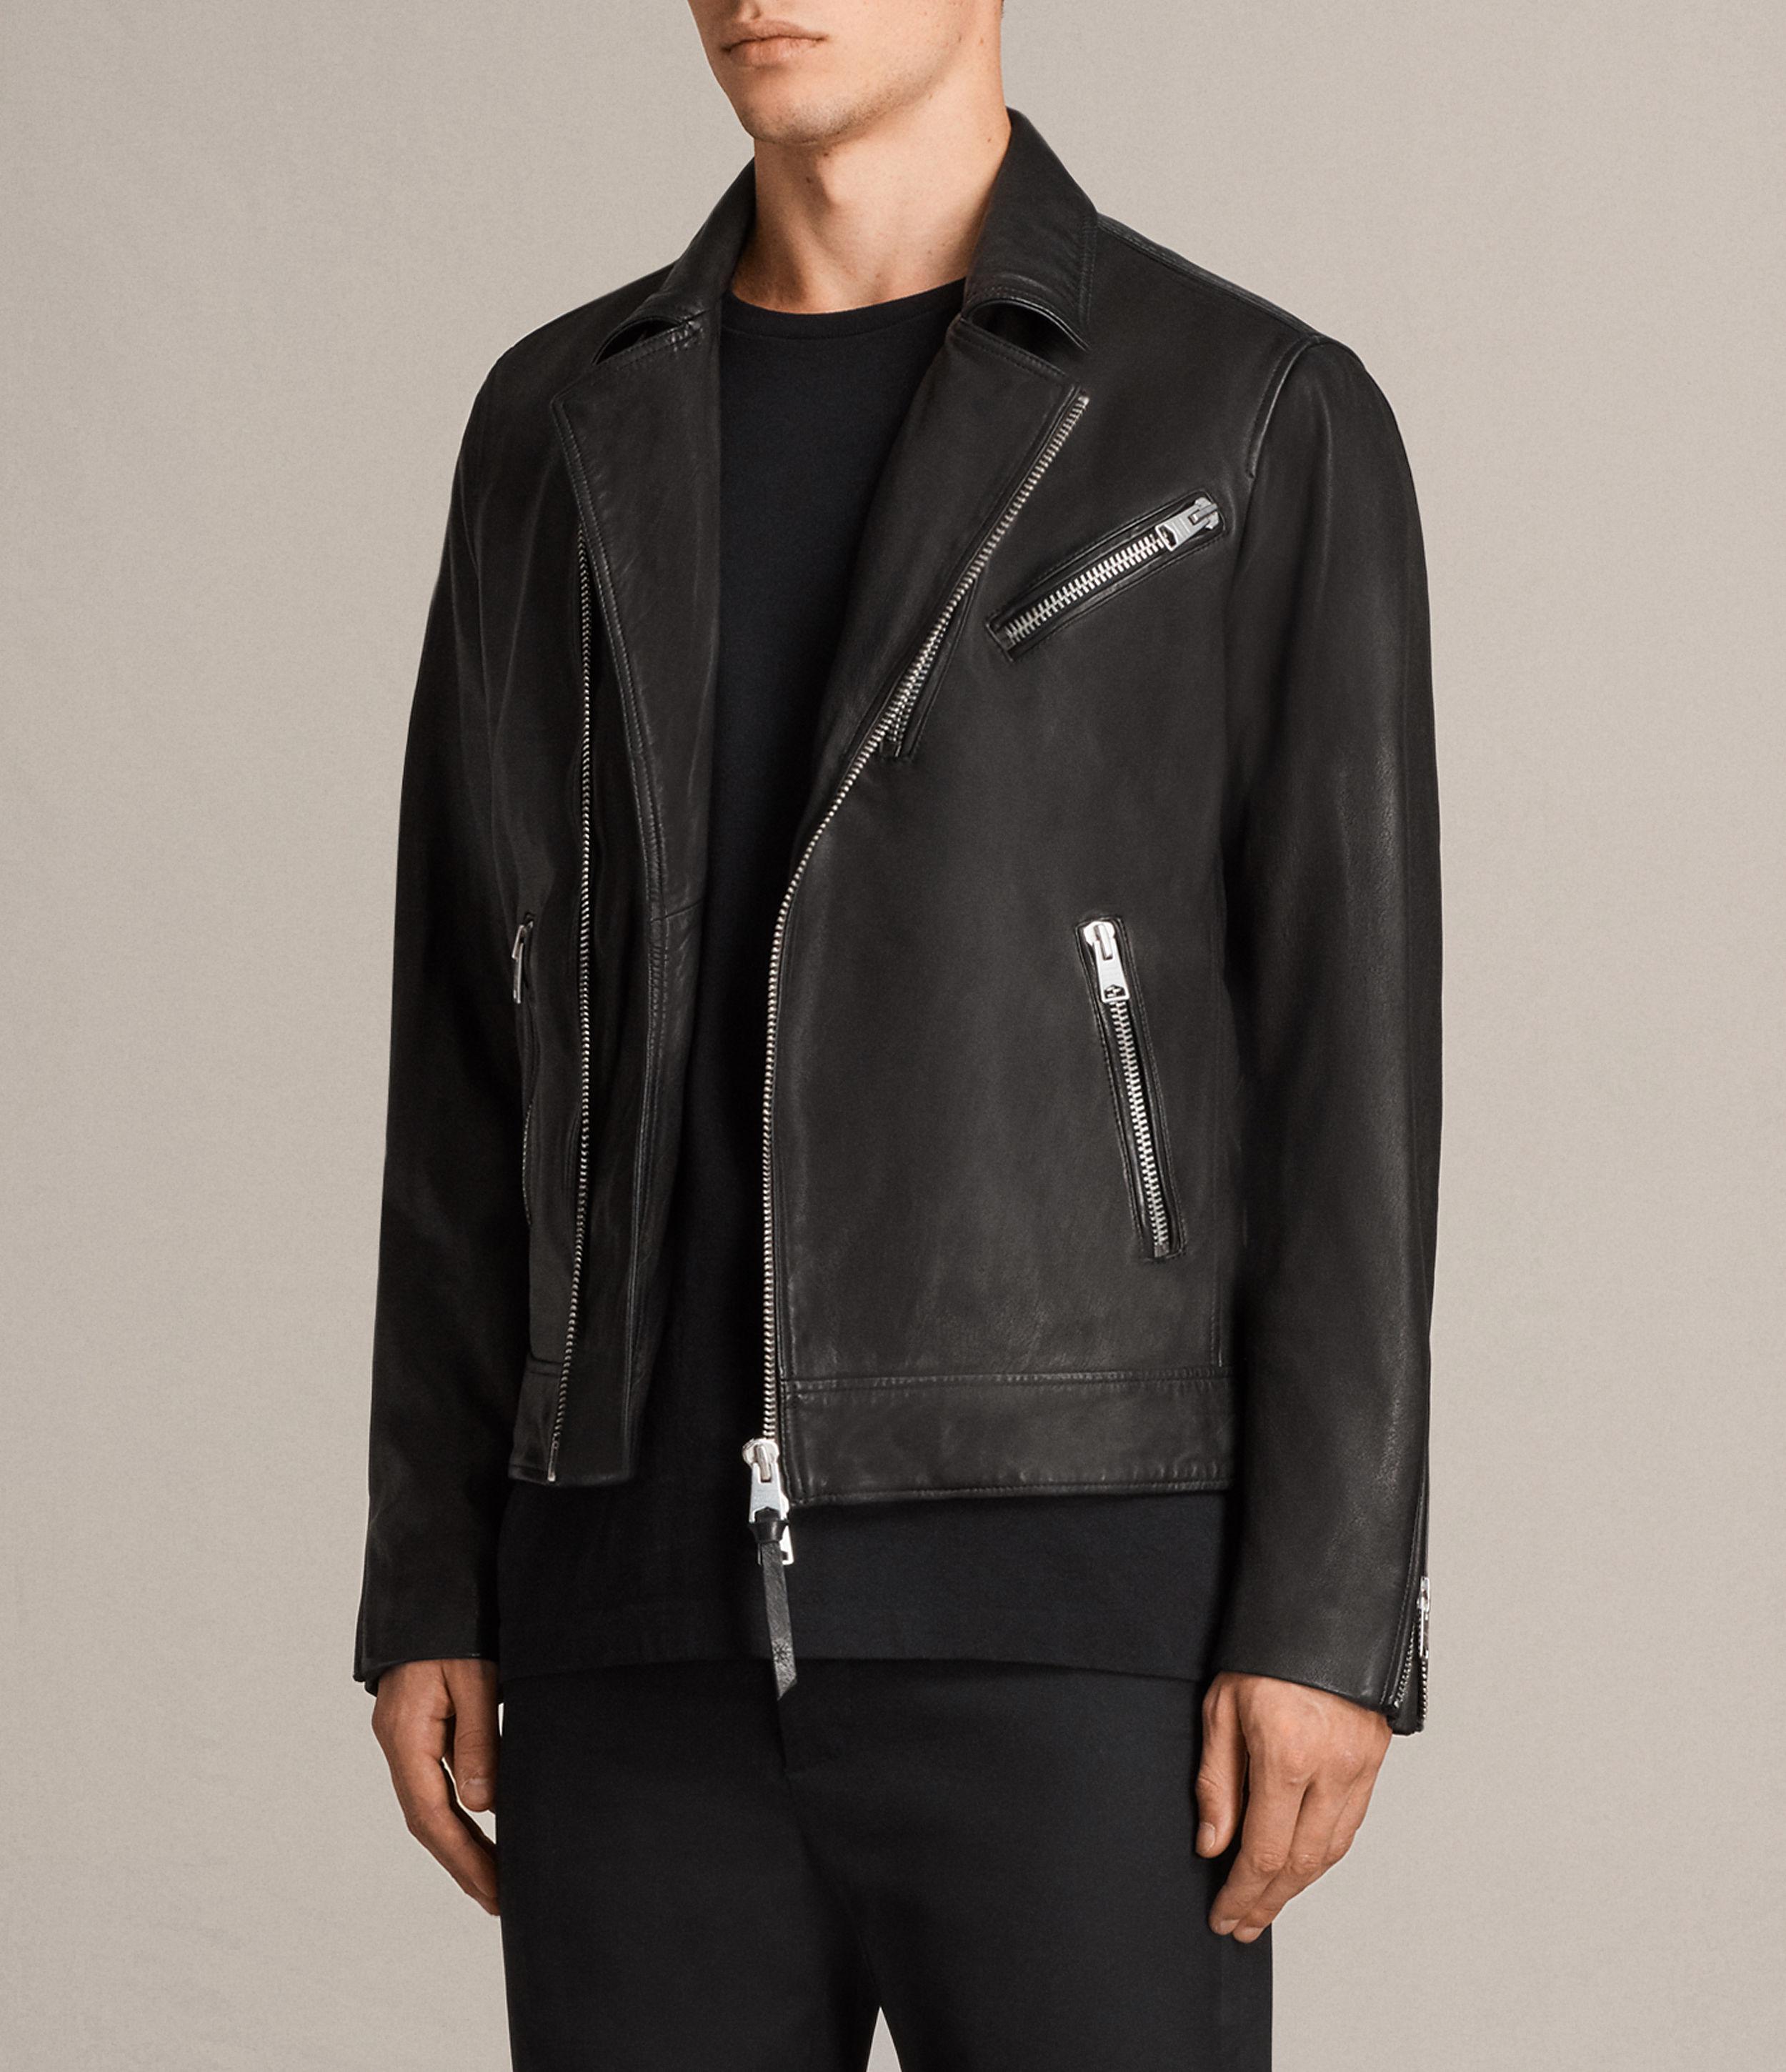 AllSaints Klisko Leather Biker Jacket in Black for Men - Lyst